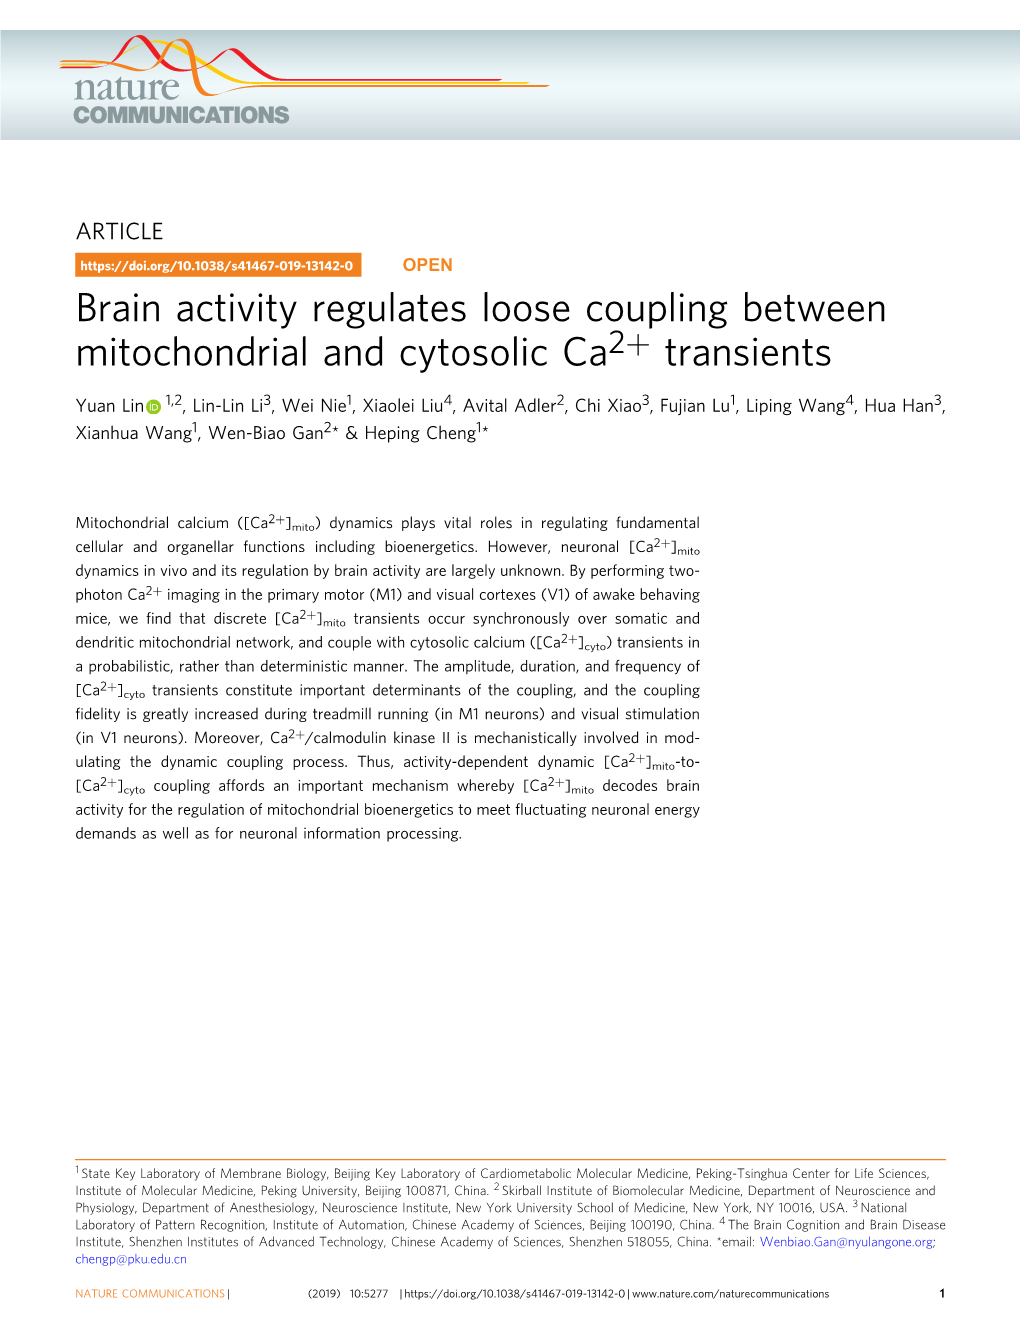 Brain Activity Regulates Loose Coupling Between Mitochondrial and Cytosolic Ca2+ Transients